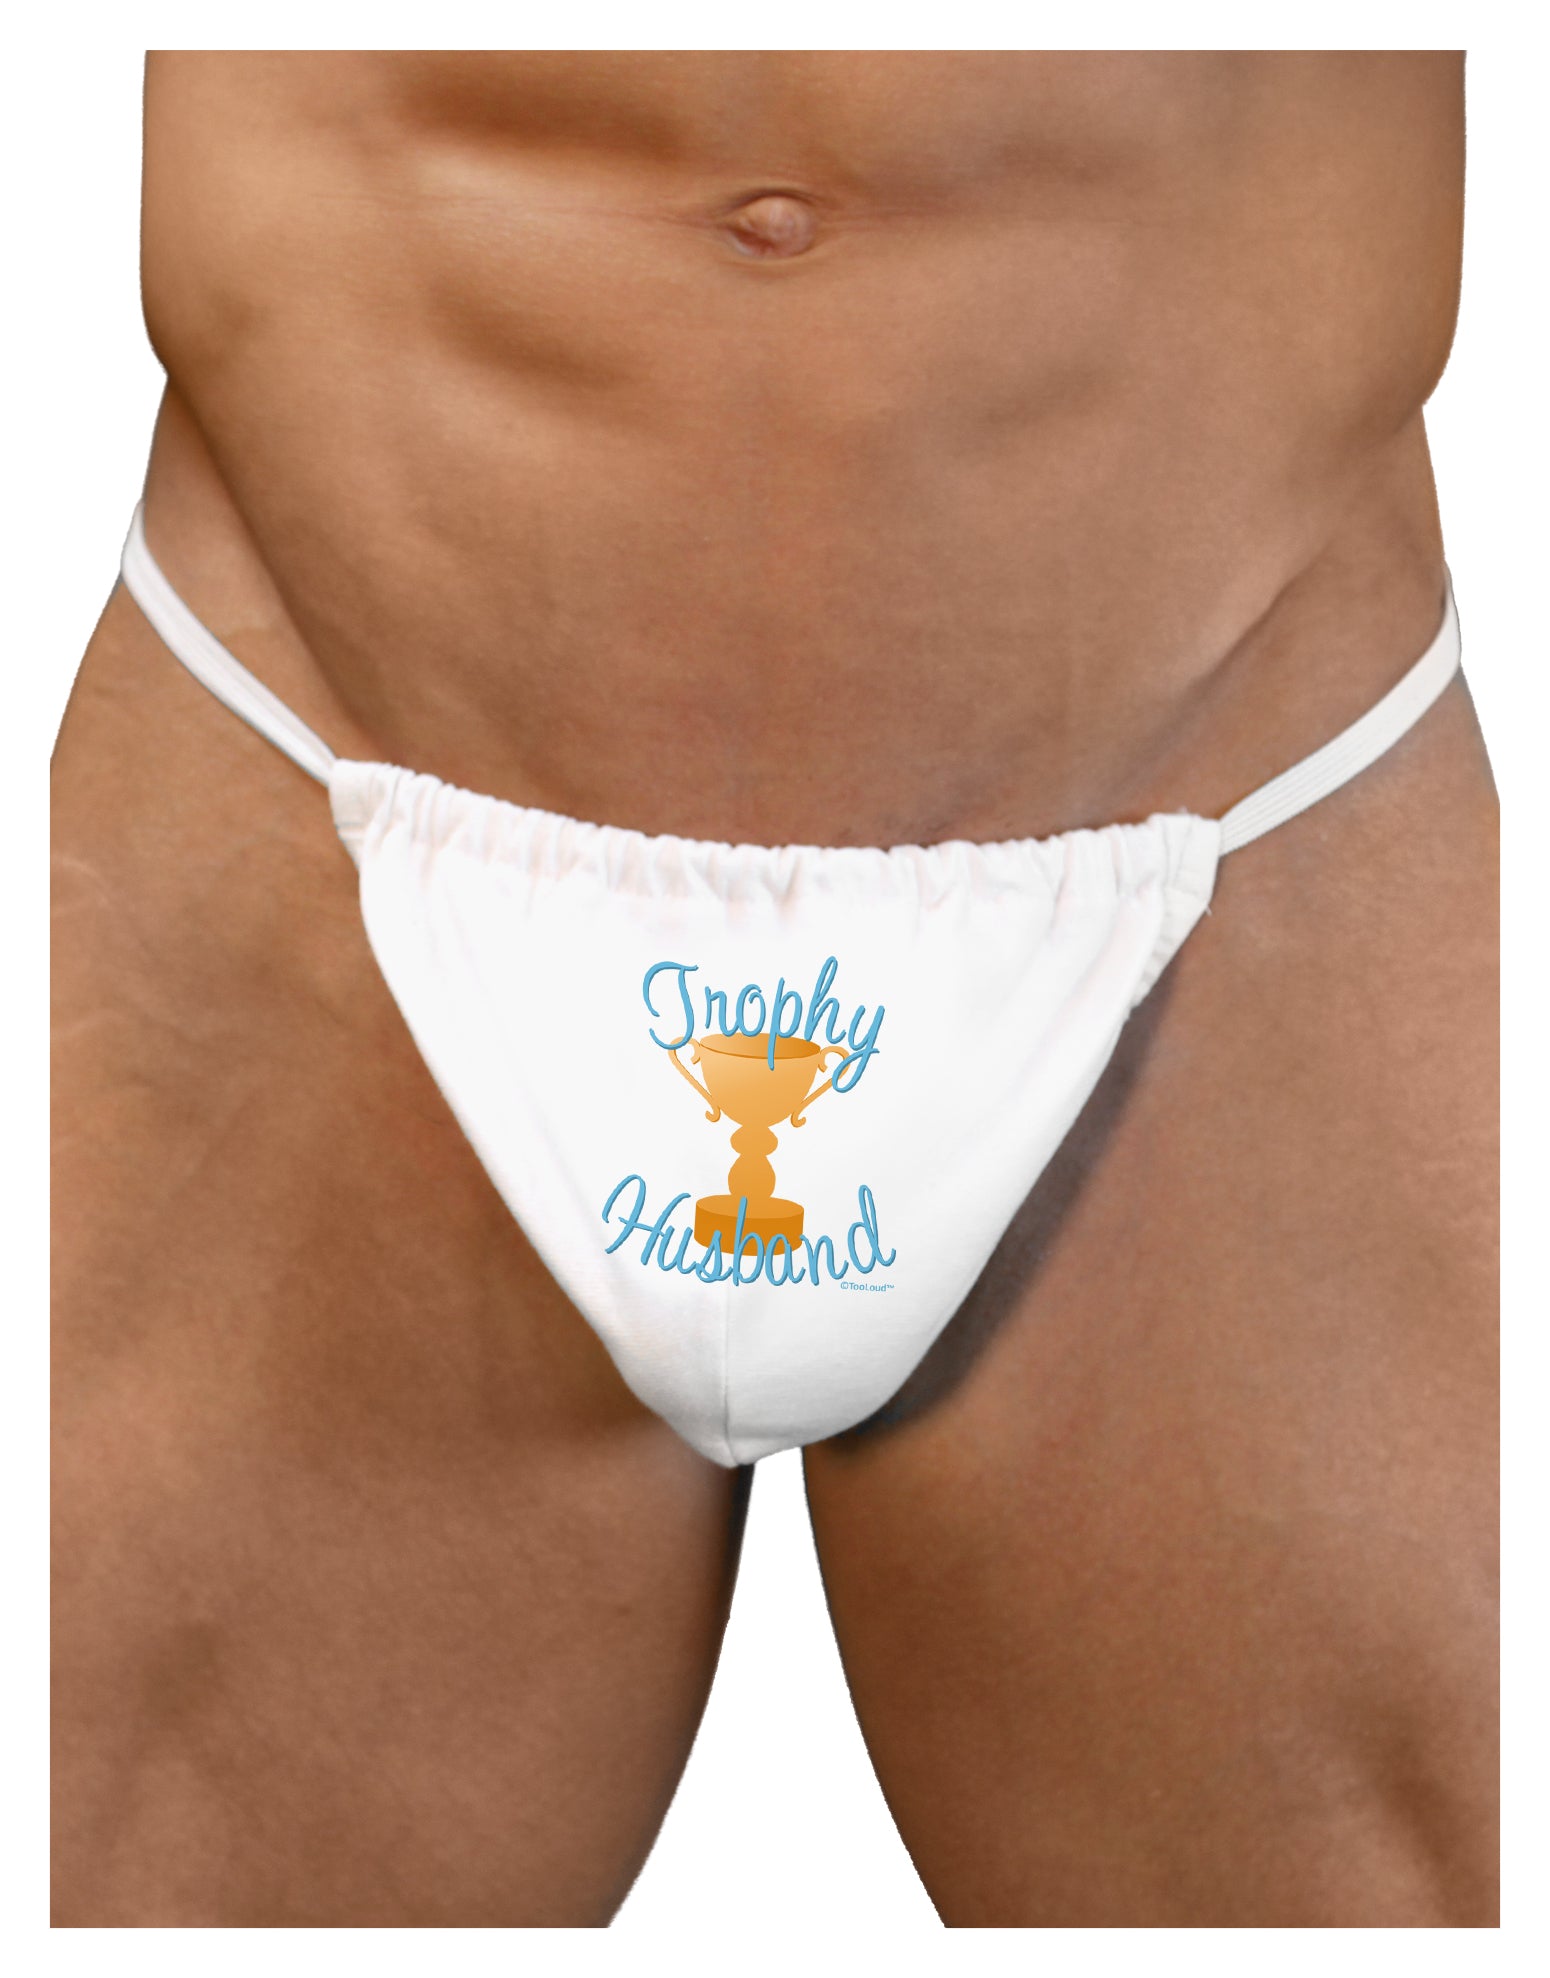 Trophy Husband Design Mens G-String Underwear by TooLoud - Davson Sales